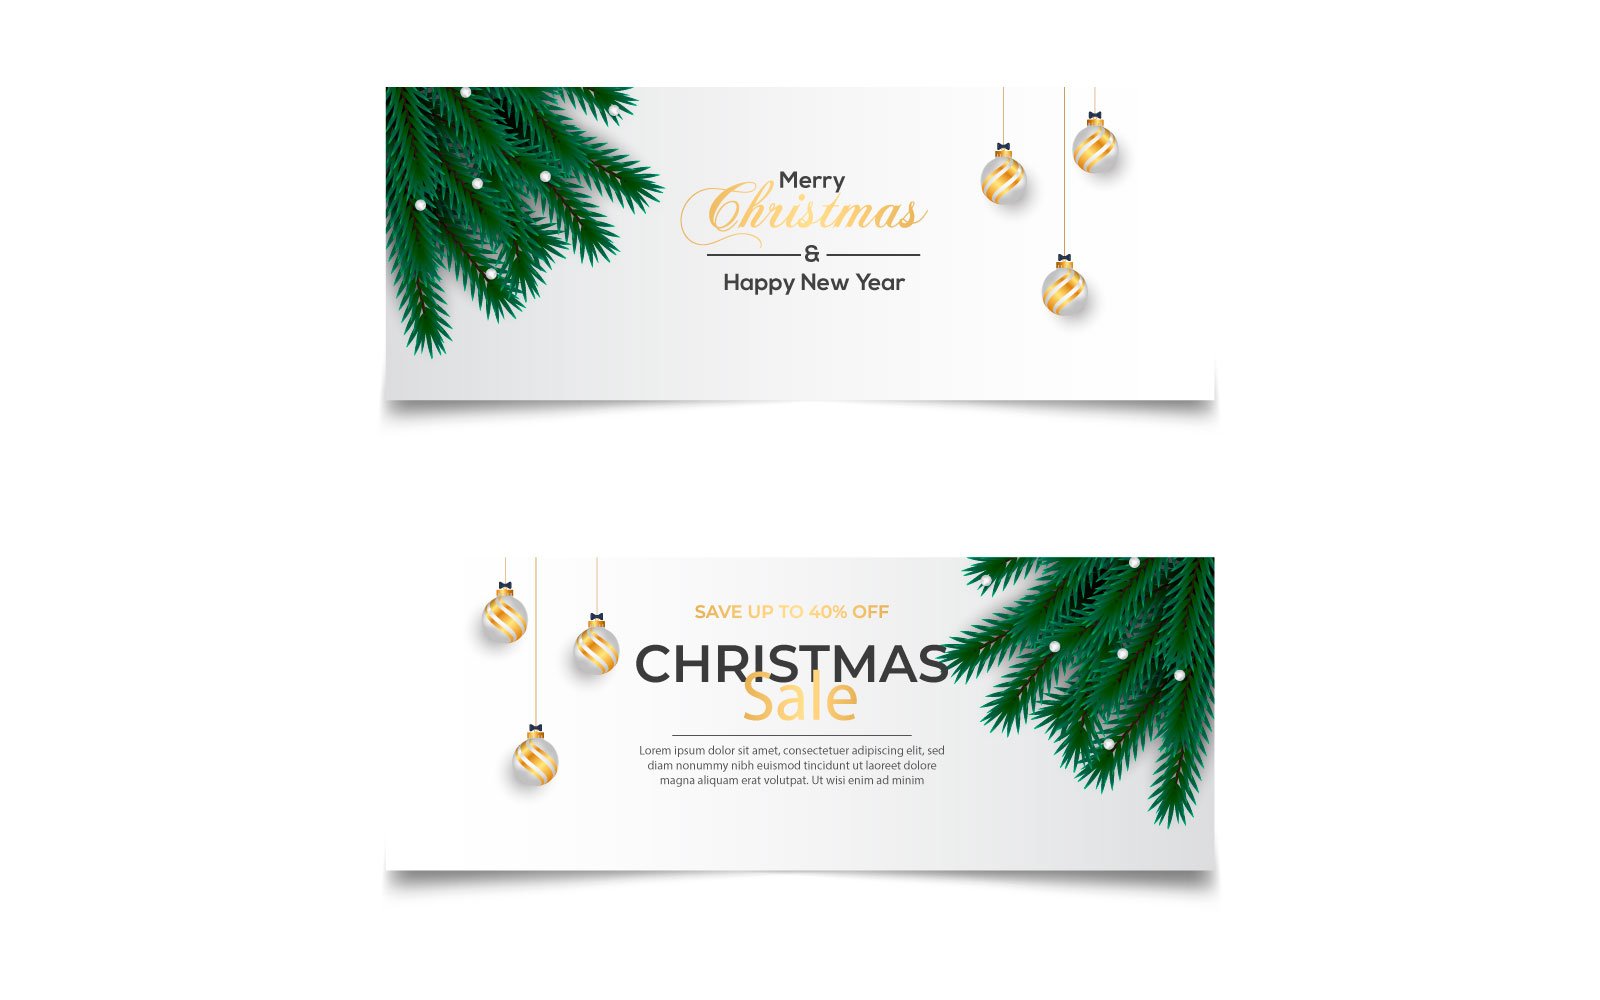 Merry Christmas season celebration social media cover template and christmas sale concept